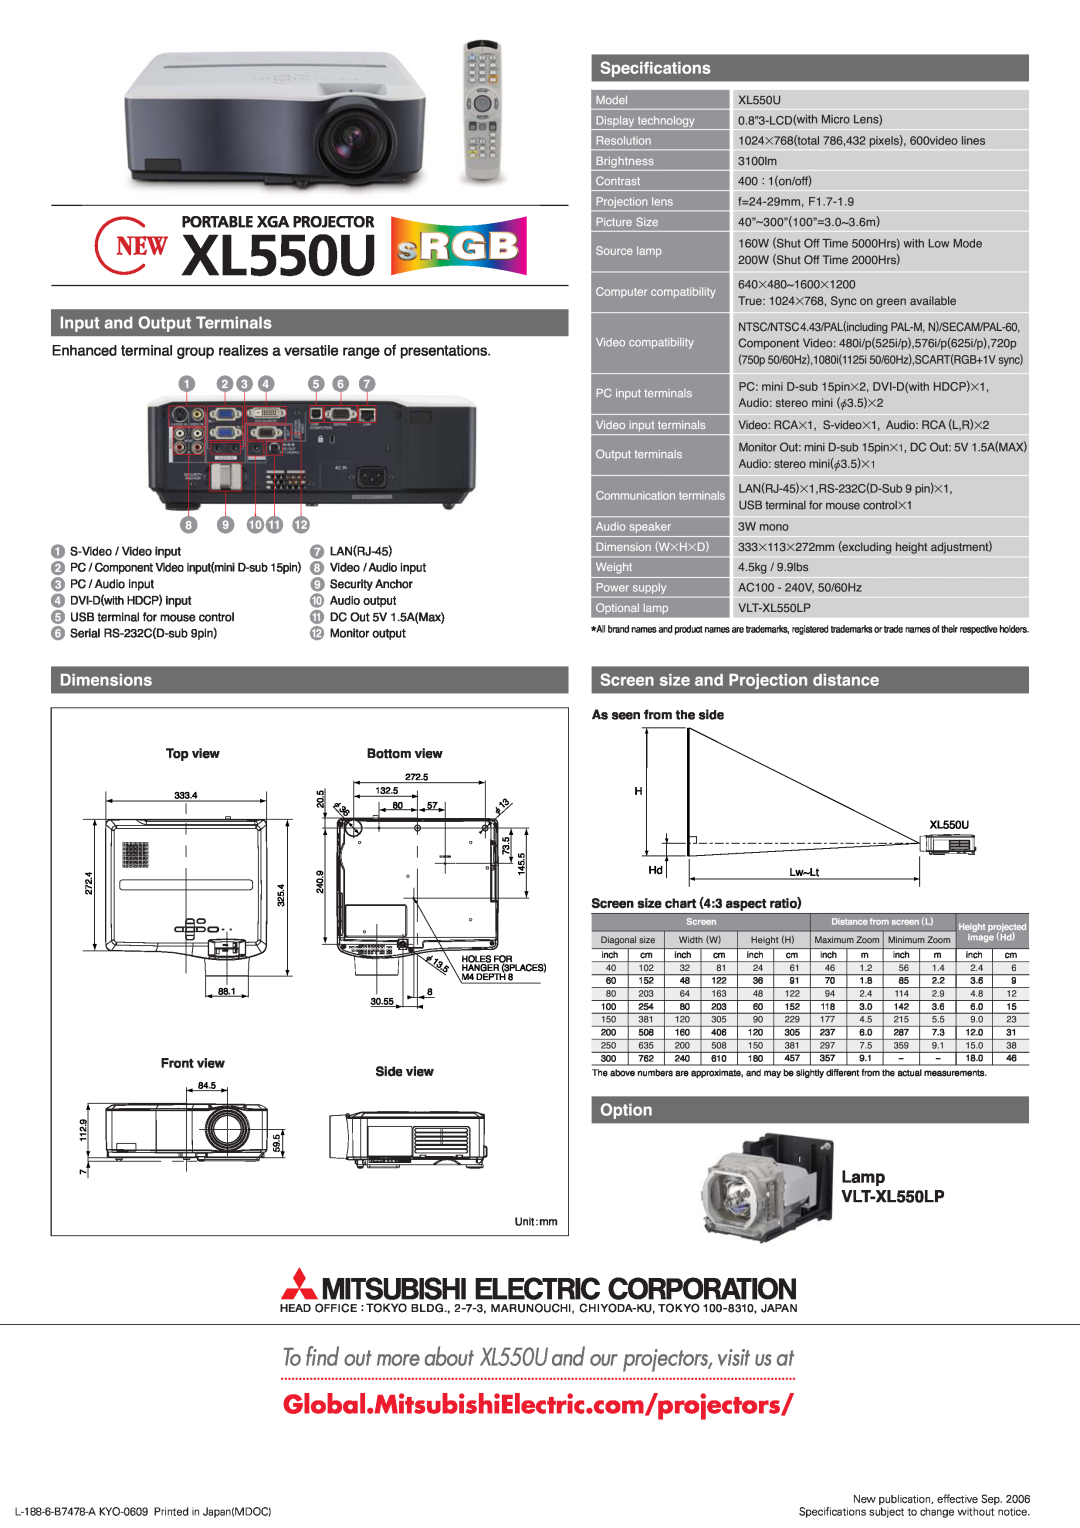 Mitsubishi Electronics XL550U $#=×, A%6H+, 5/86#×7$× /6#%6×, $7%$, @=&#8$ %8××$, 5#+0!!×!22*+50×*,*= -%.9, ACB6%, 8%7@ 